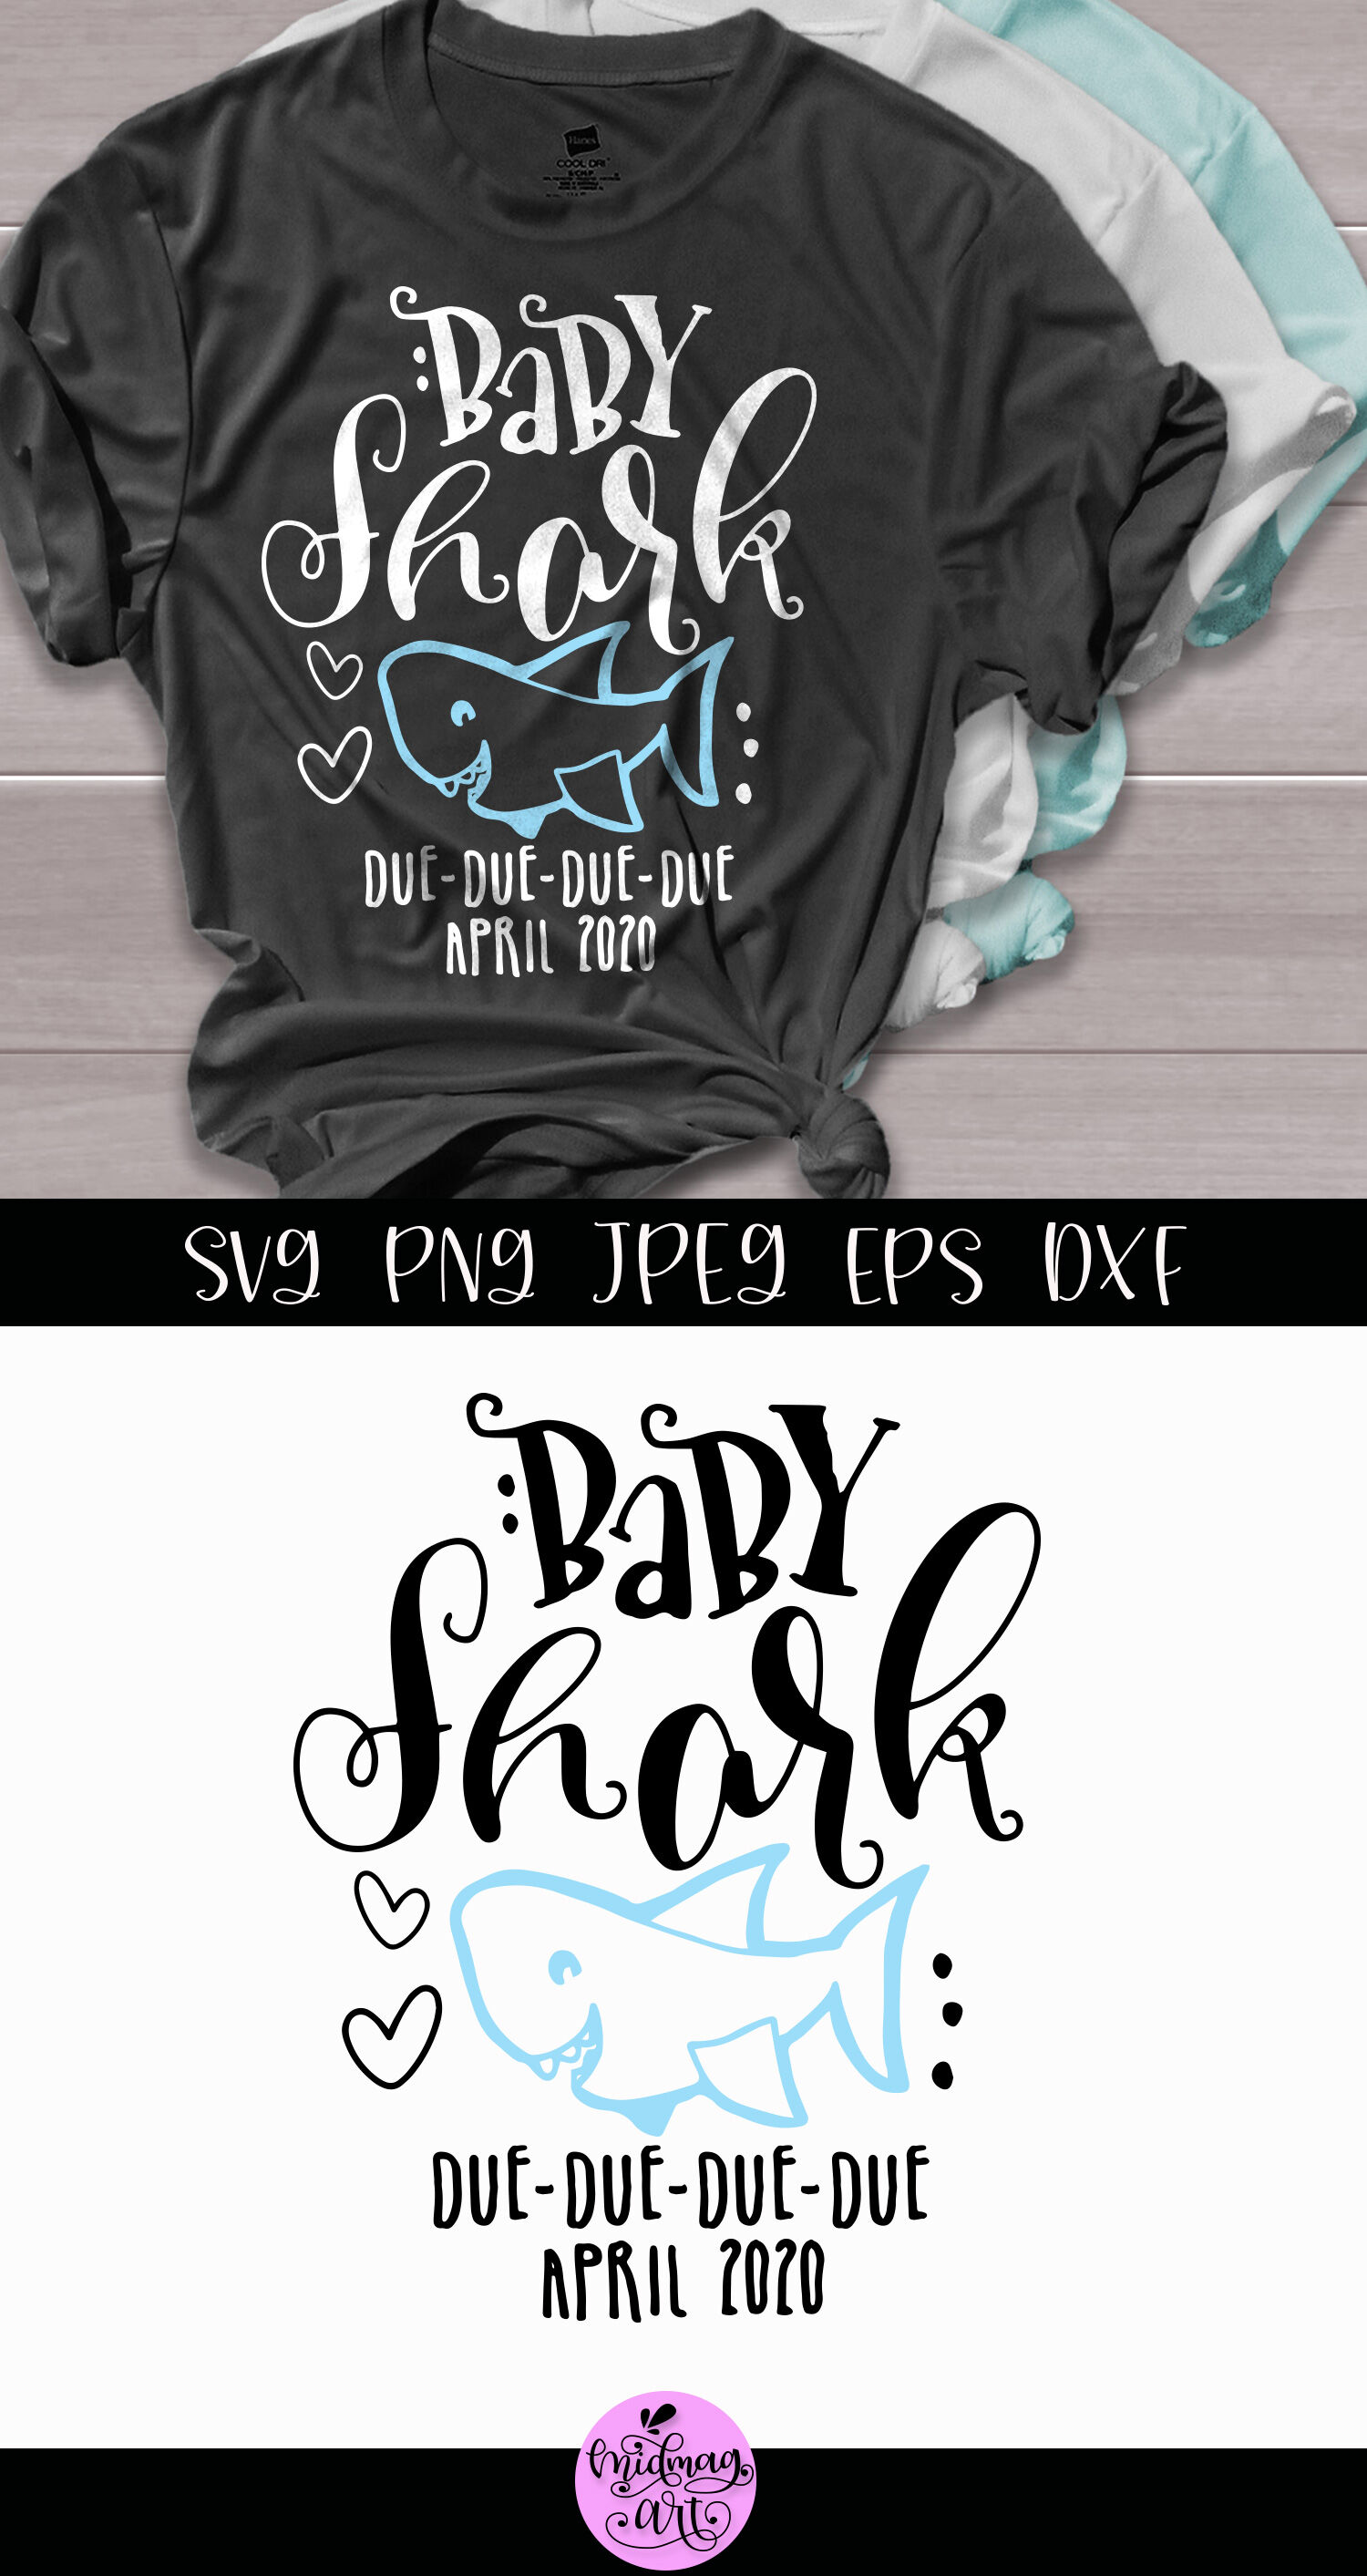 Free Free 143 Baby Shark Shirt Svg SVG PNG EPS DXF File